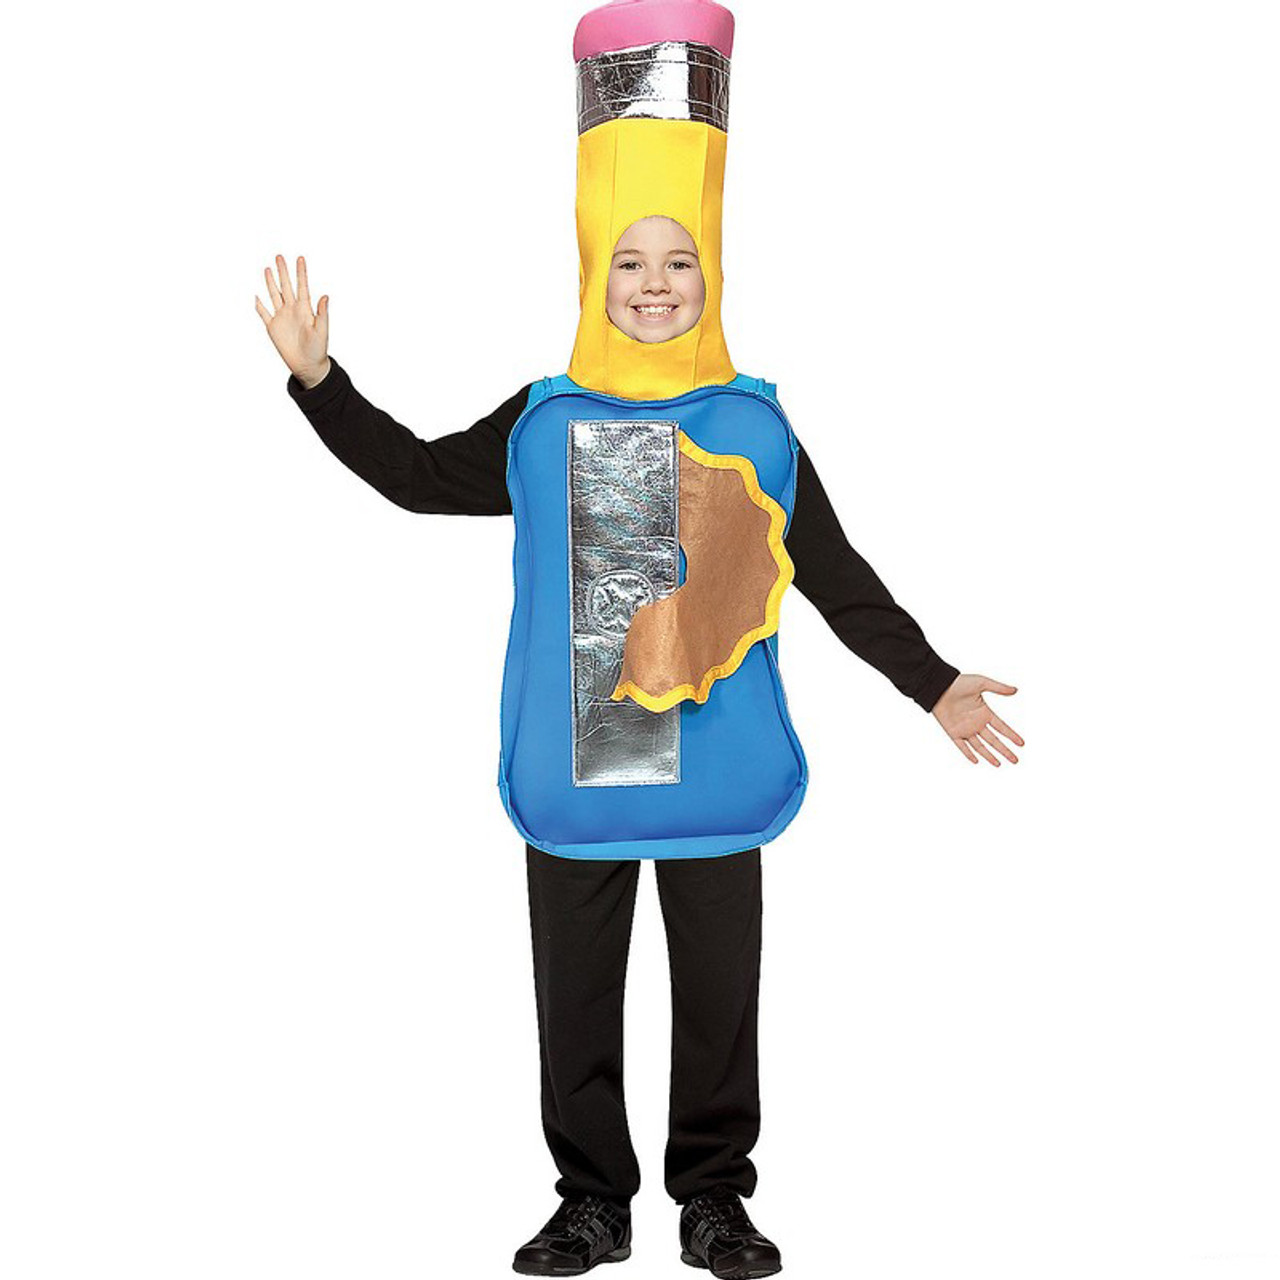 Kids Pencil Sharpener Costume